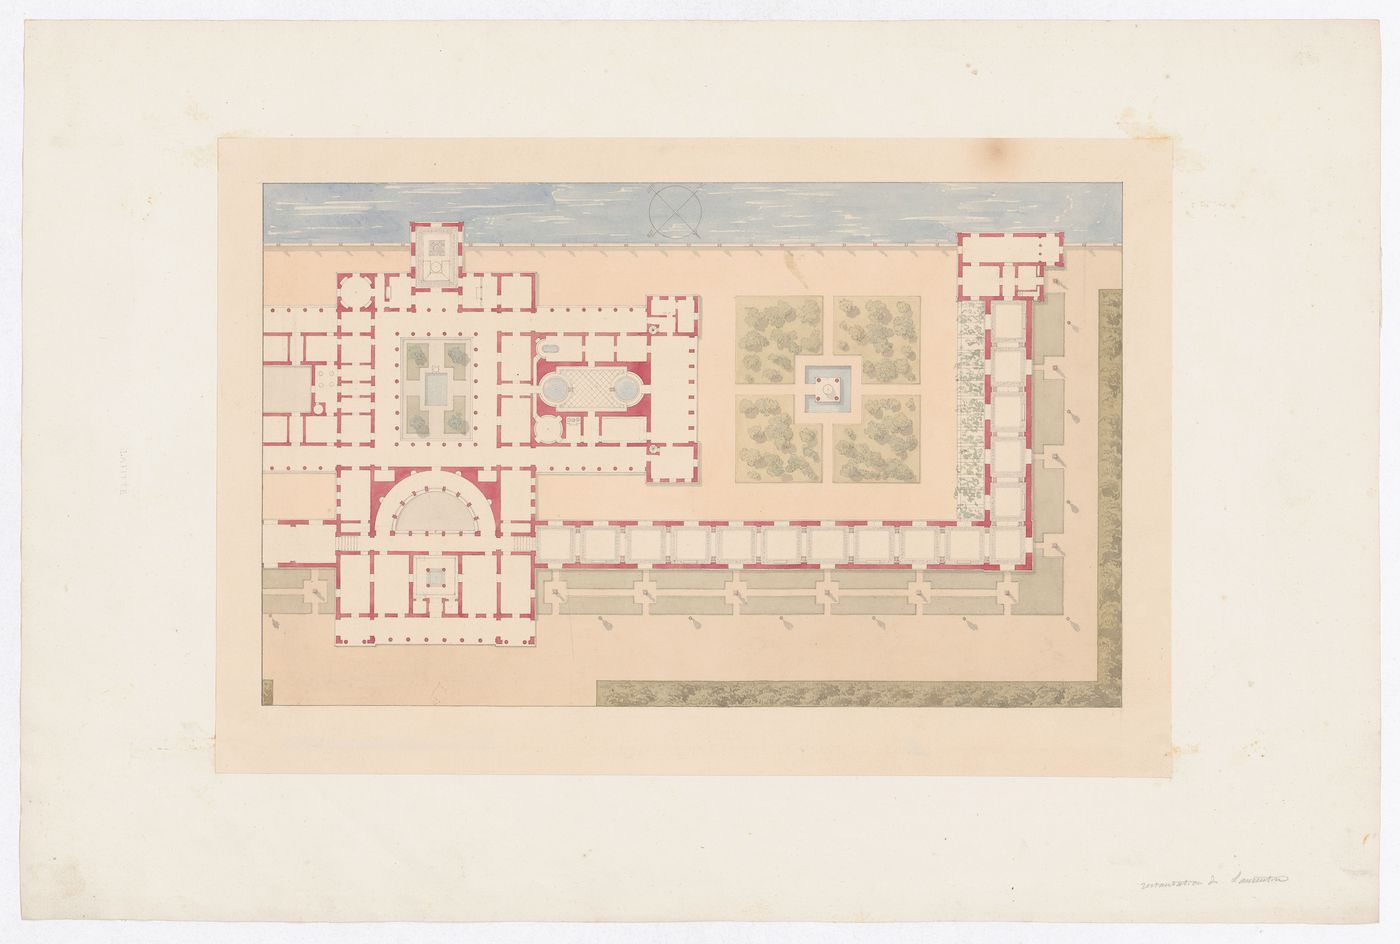 Hubert Rohault de Fleury's reconstruction of Pliny the Younger's Laurentine Villa, Laurentum, possibly after Lafitte